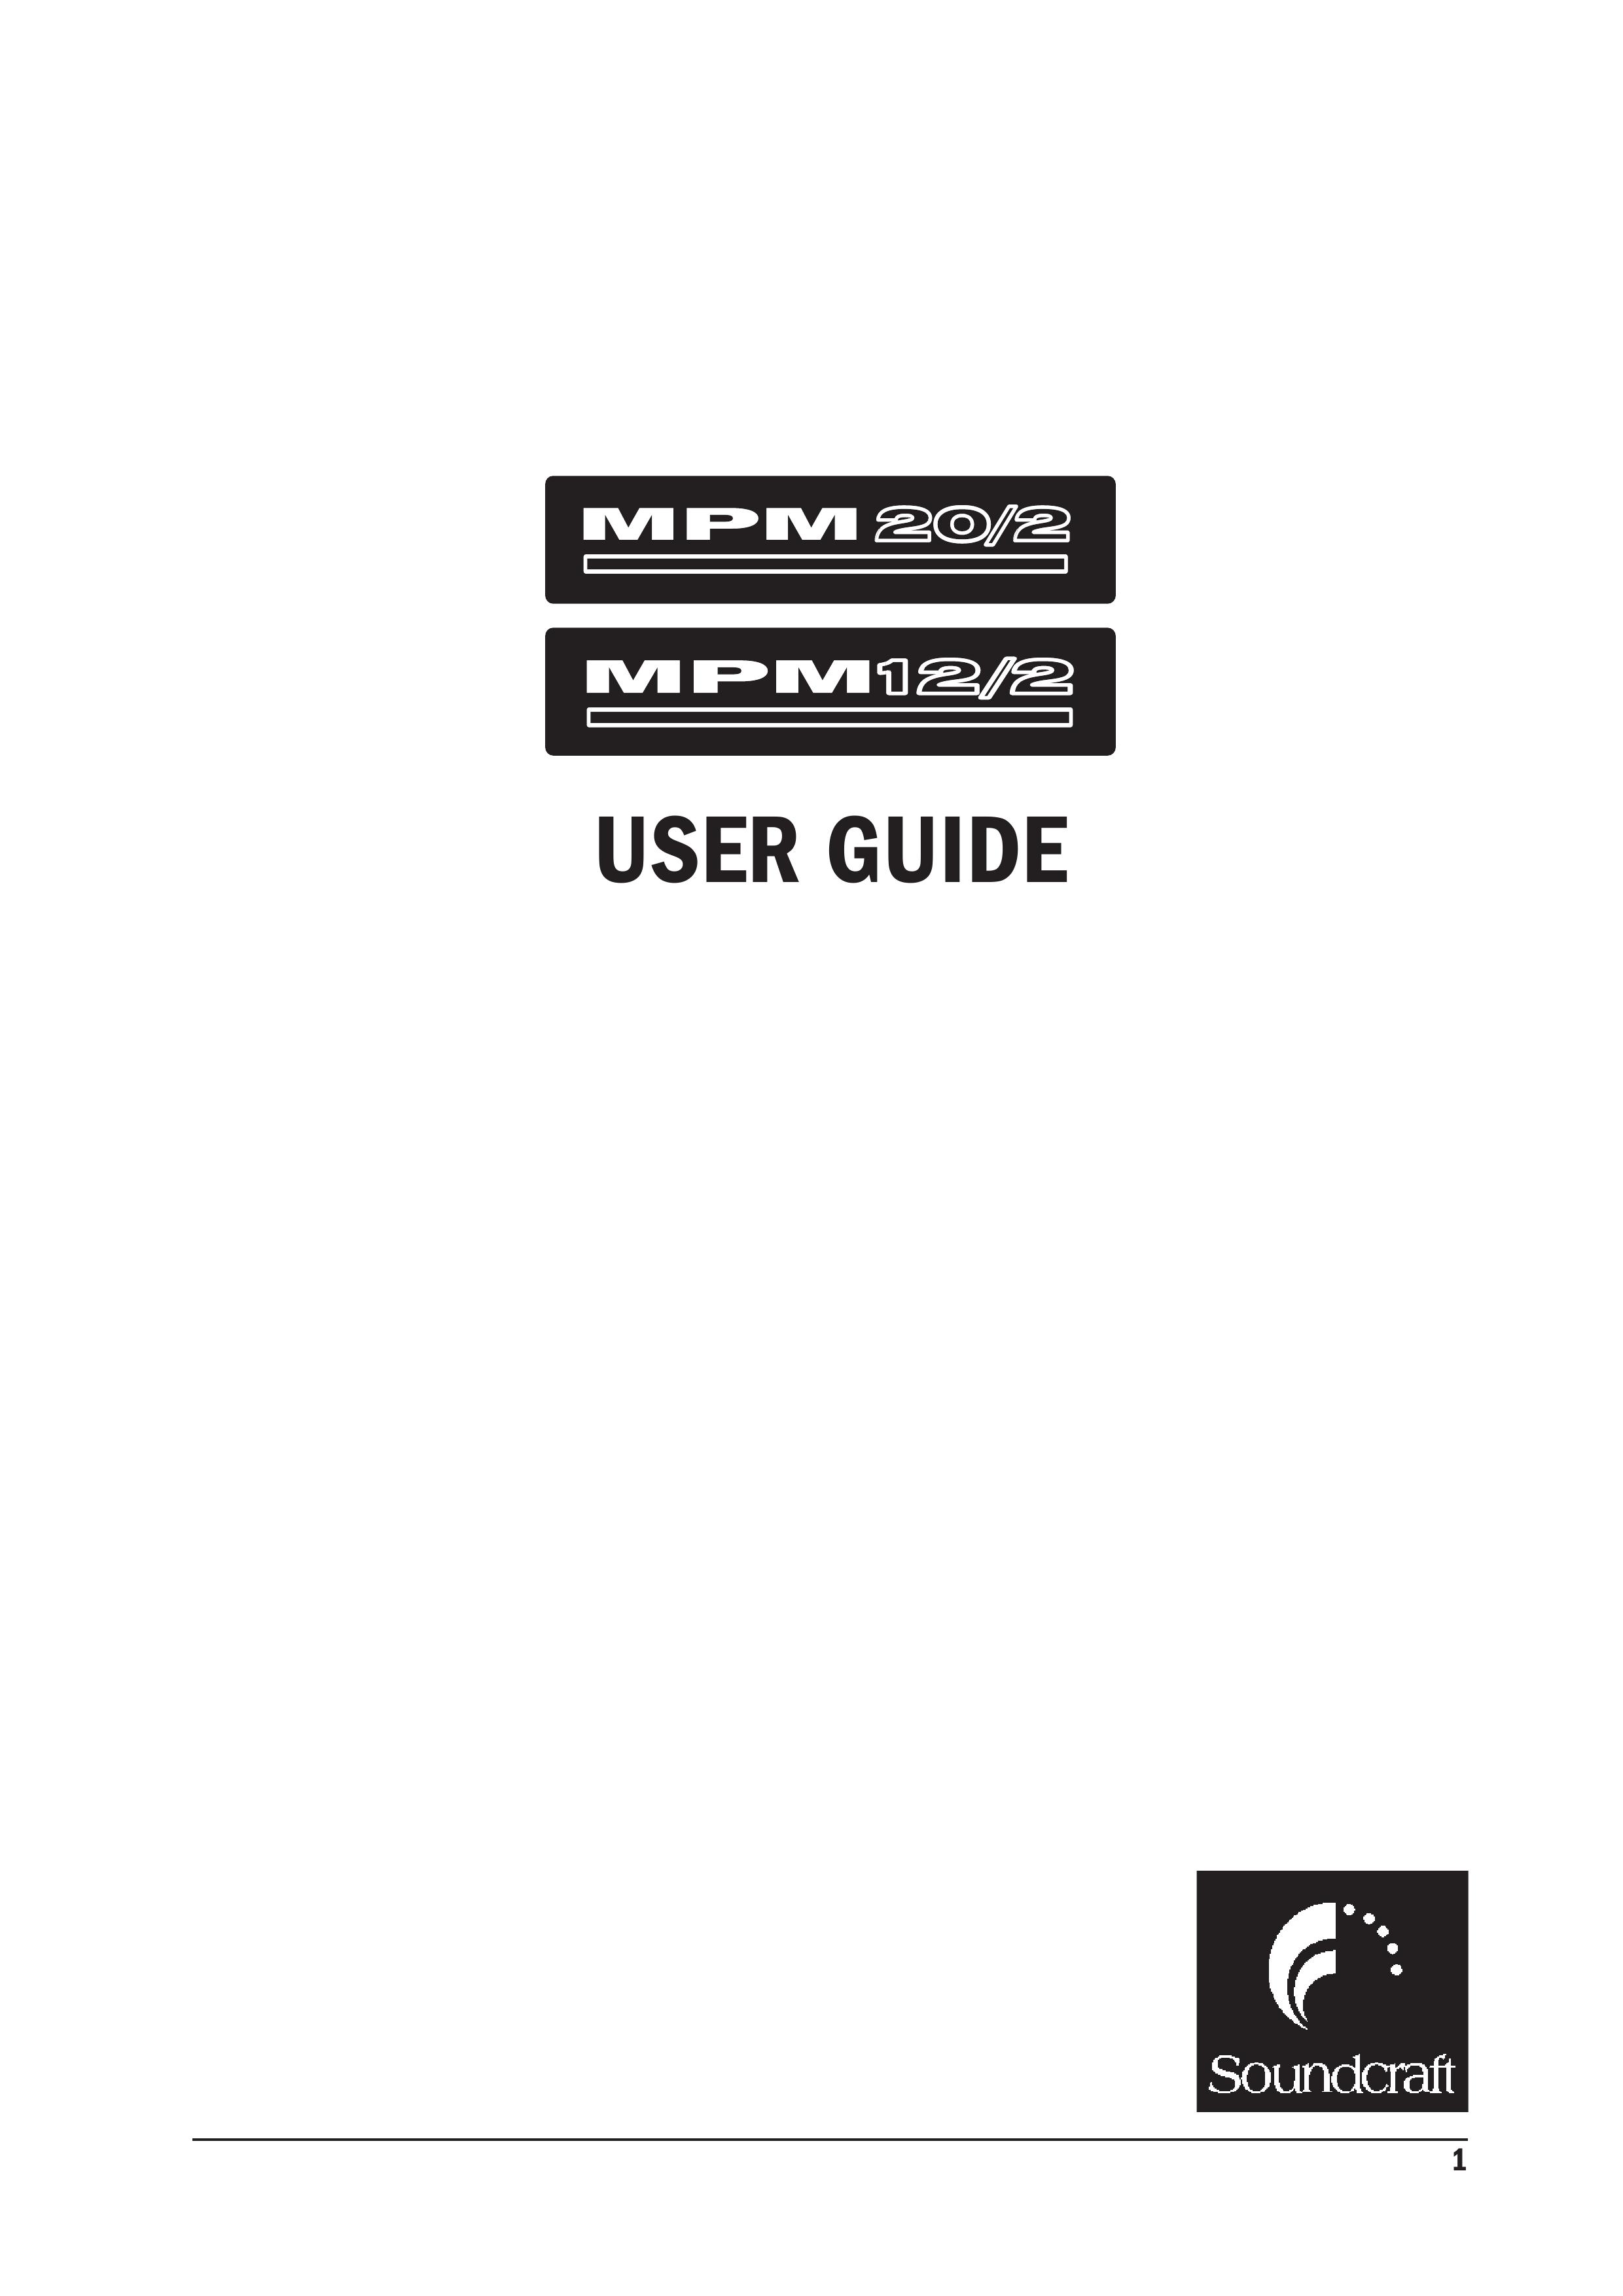 SoundCraft MPM 20/2 Music Mixer User Manual